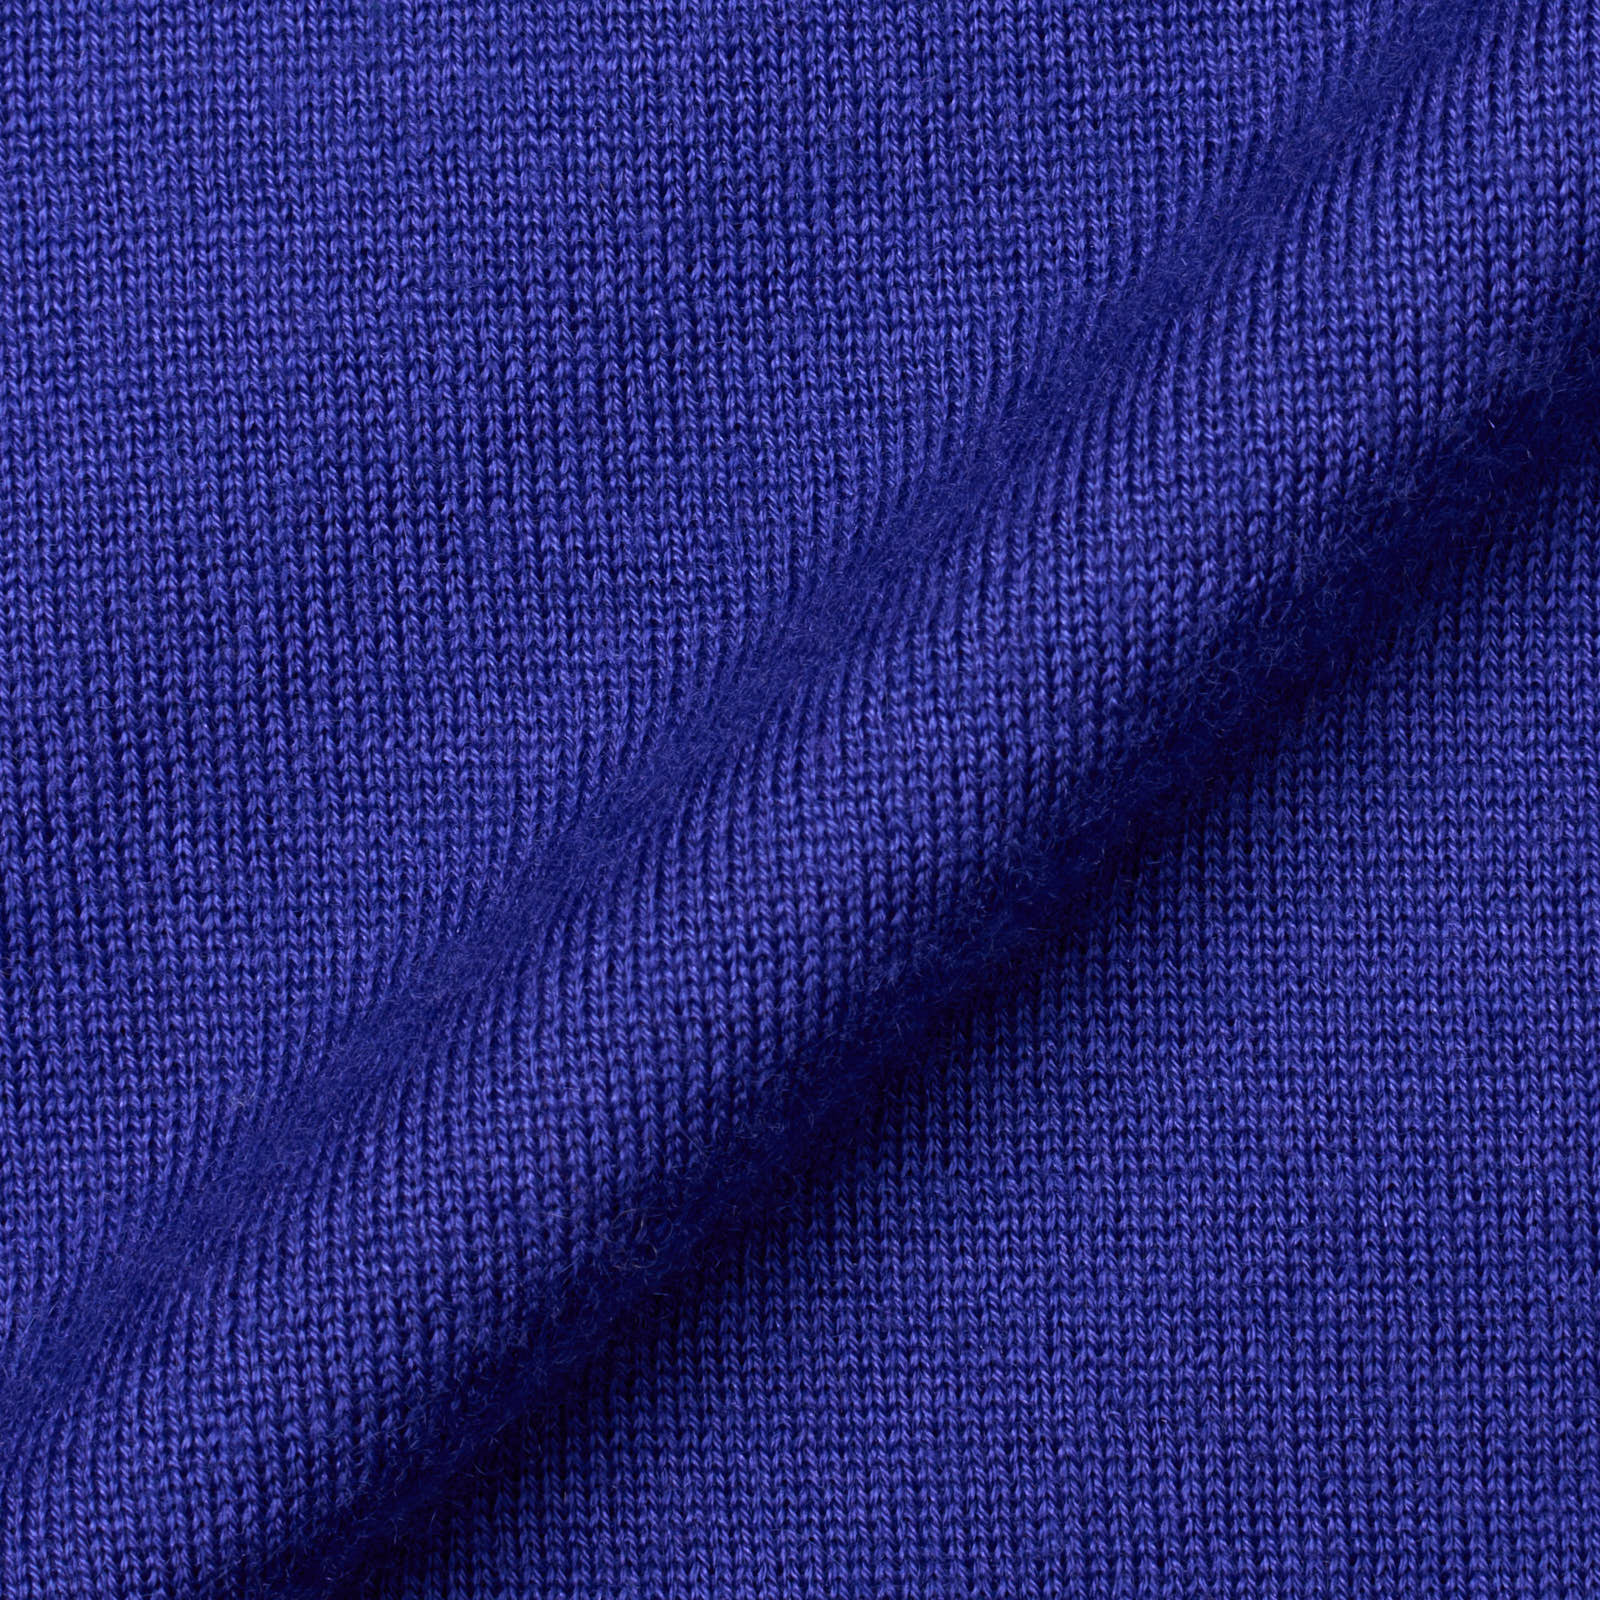 ONES Navy Blue Loro Piana Cashmere-Silk Knit Sweater Vest EU 52 NEW US L